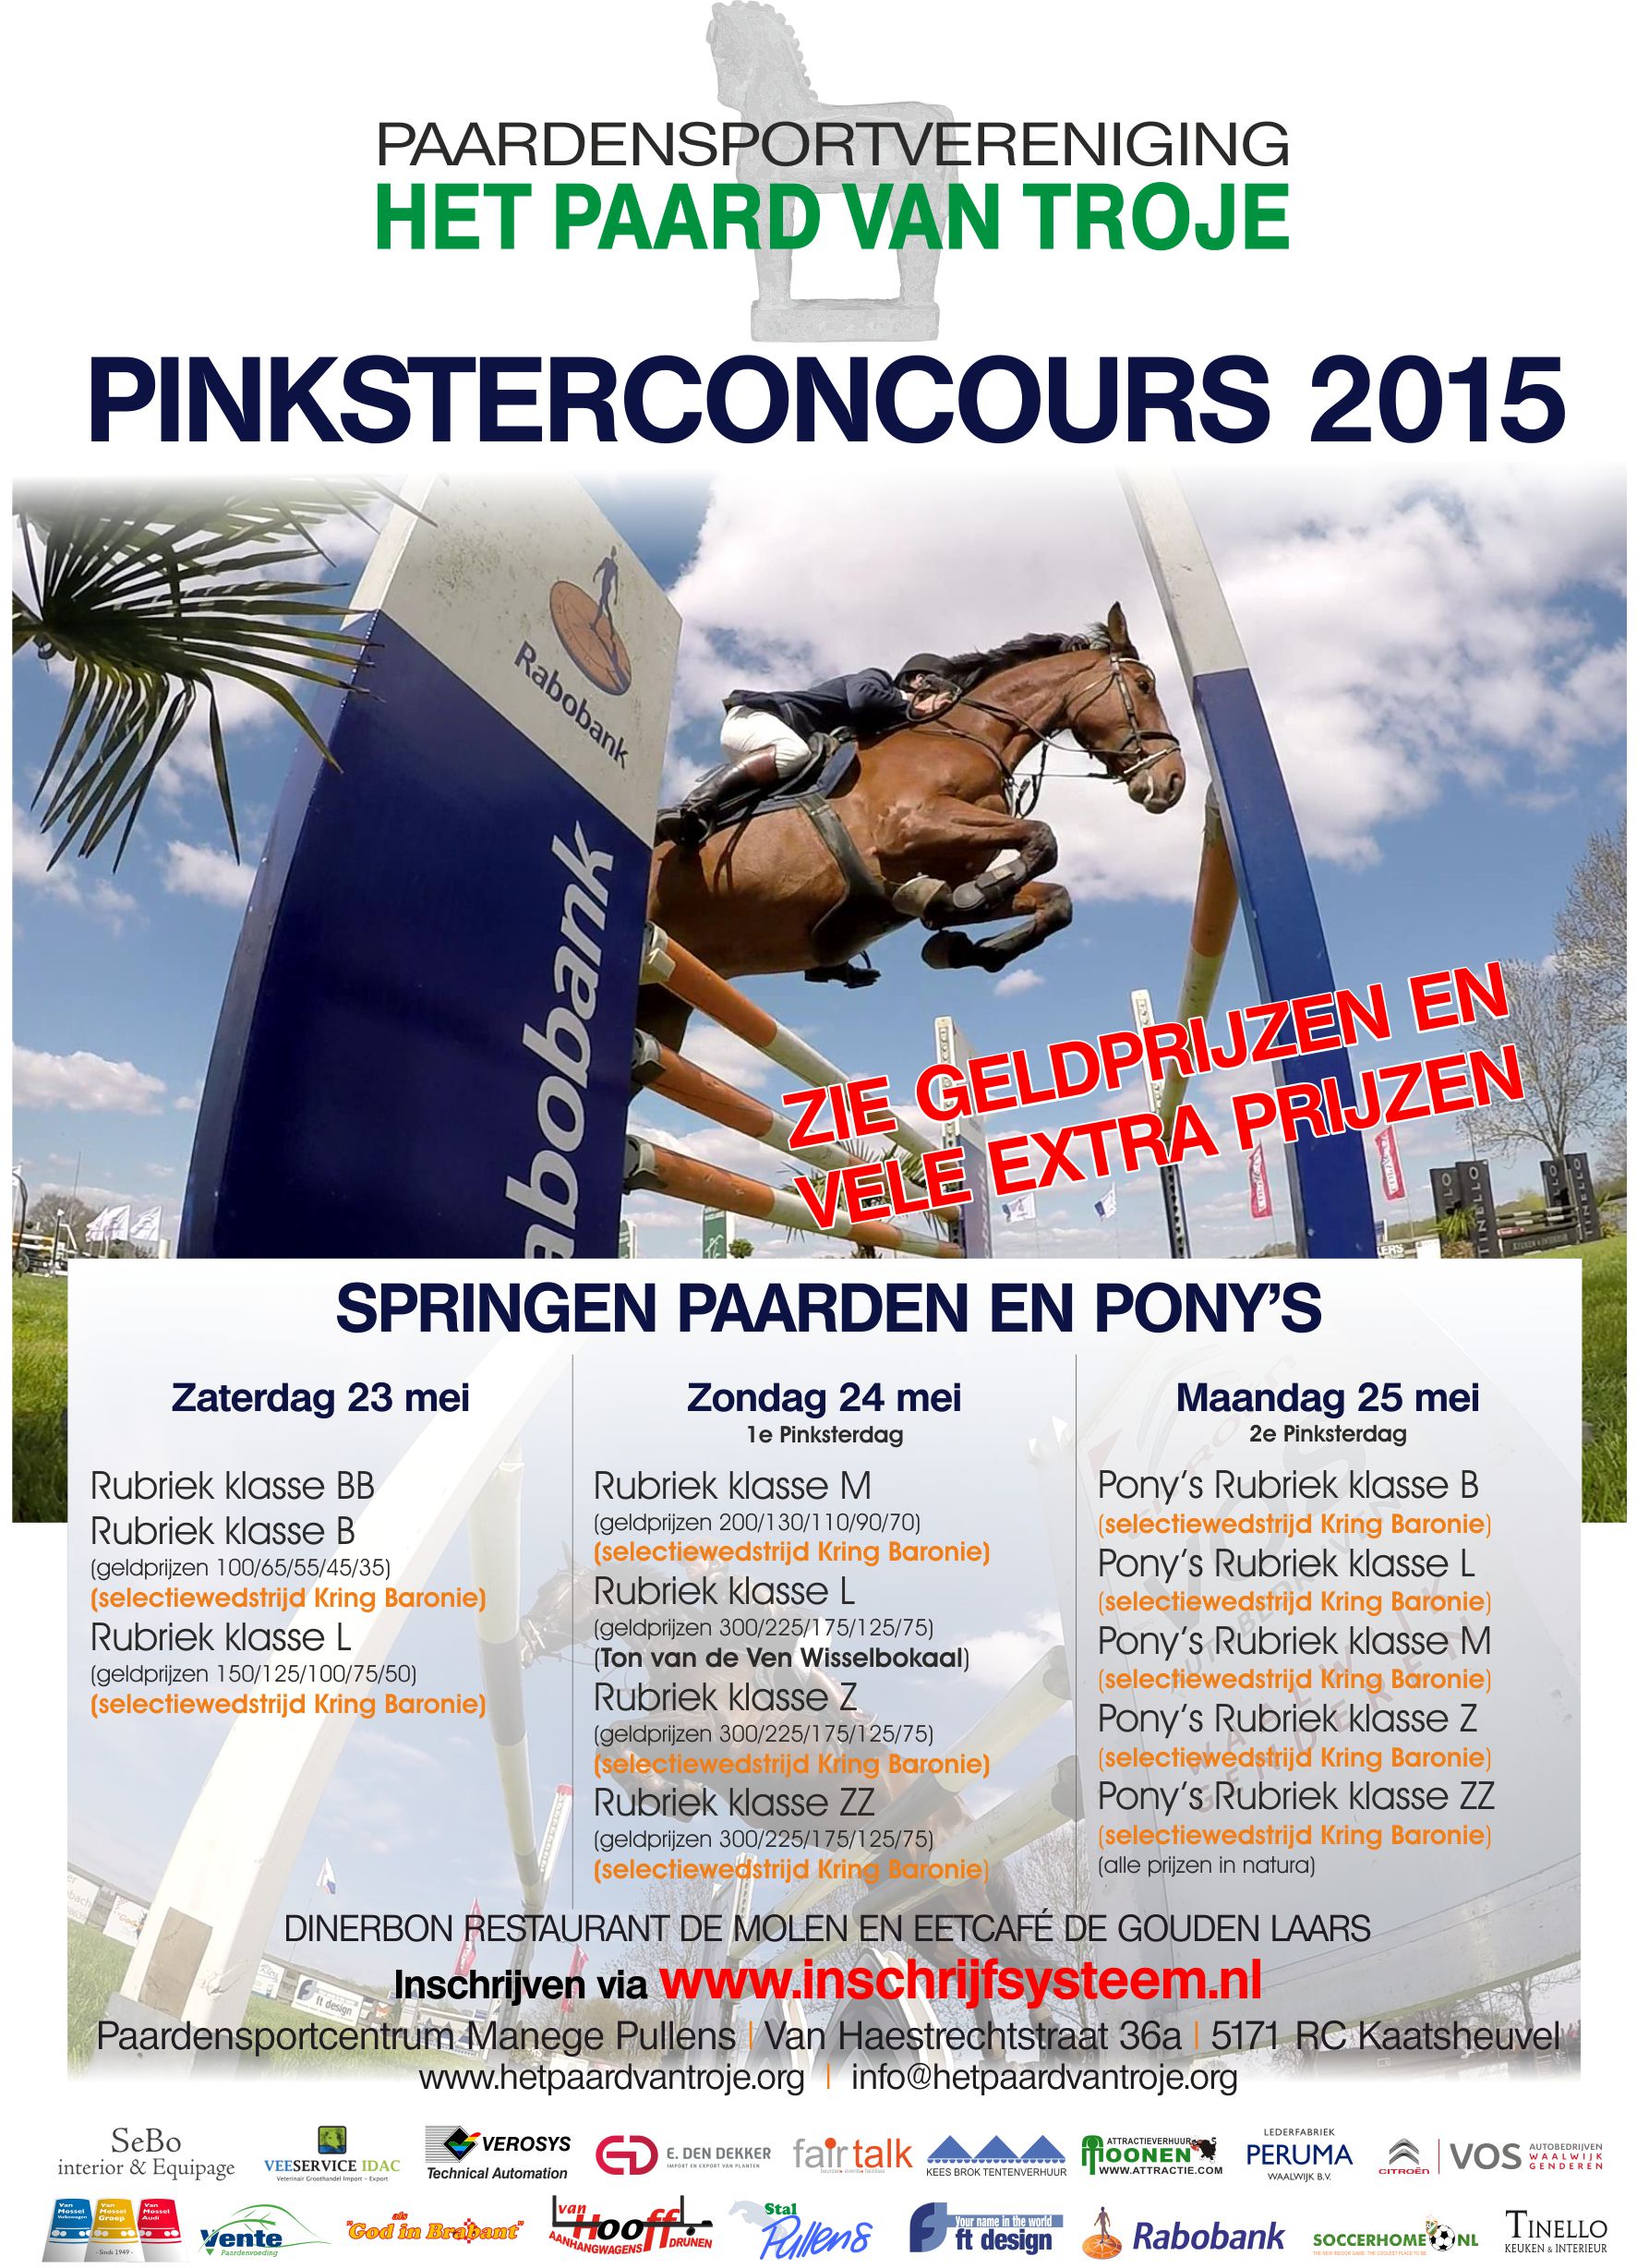 Pinksterconcours 2015 manege Pullen, Paard van Troje